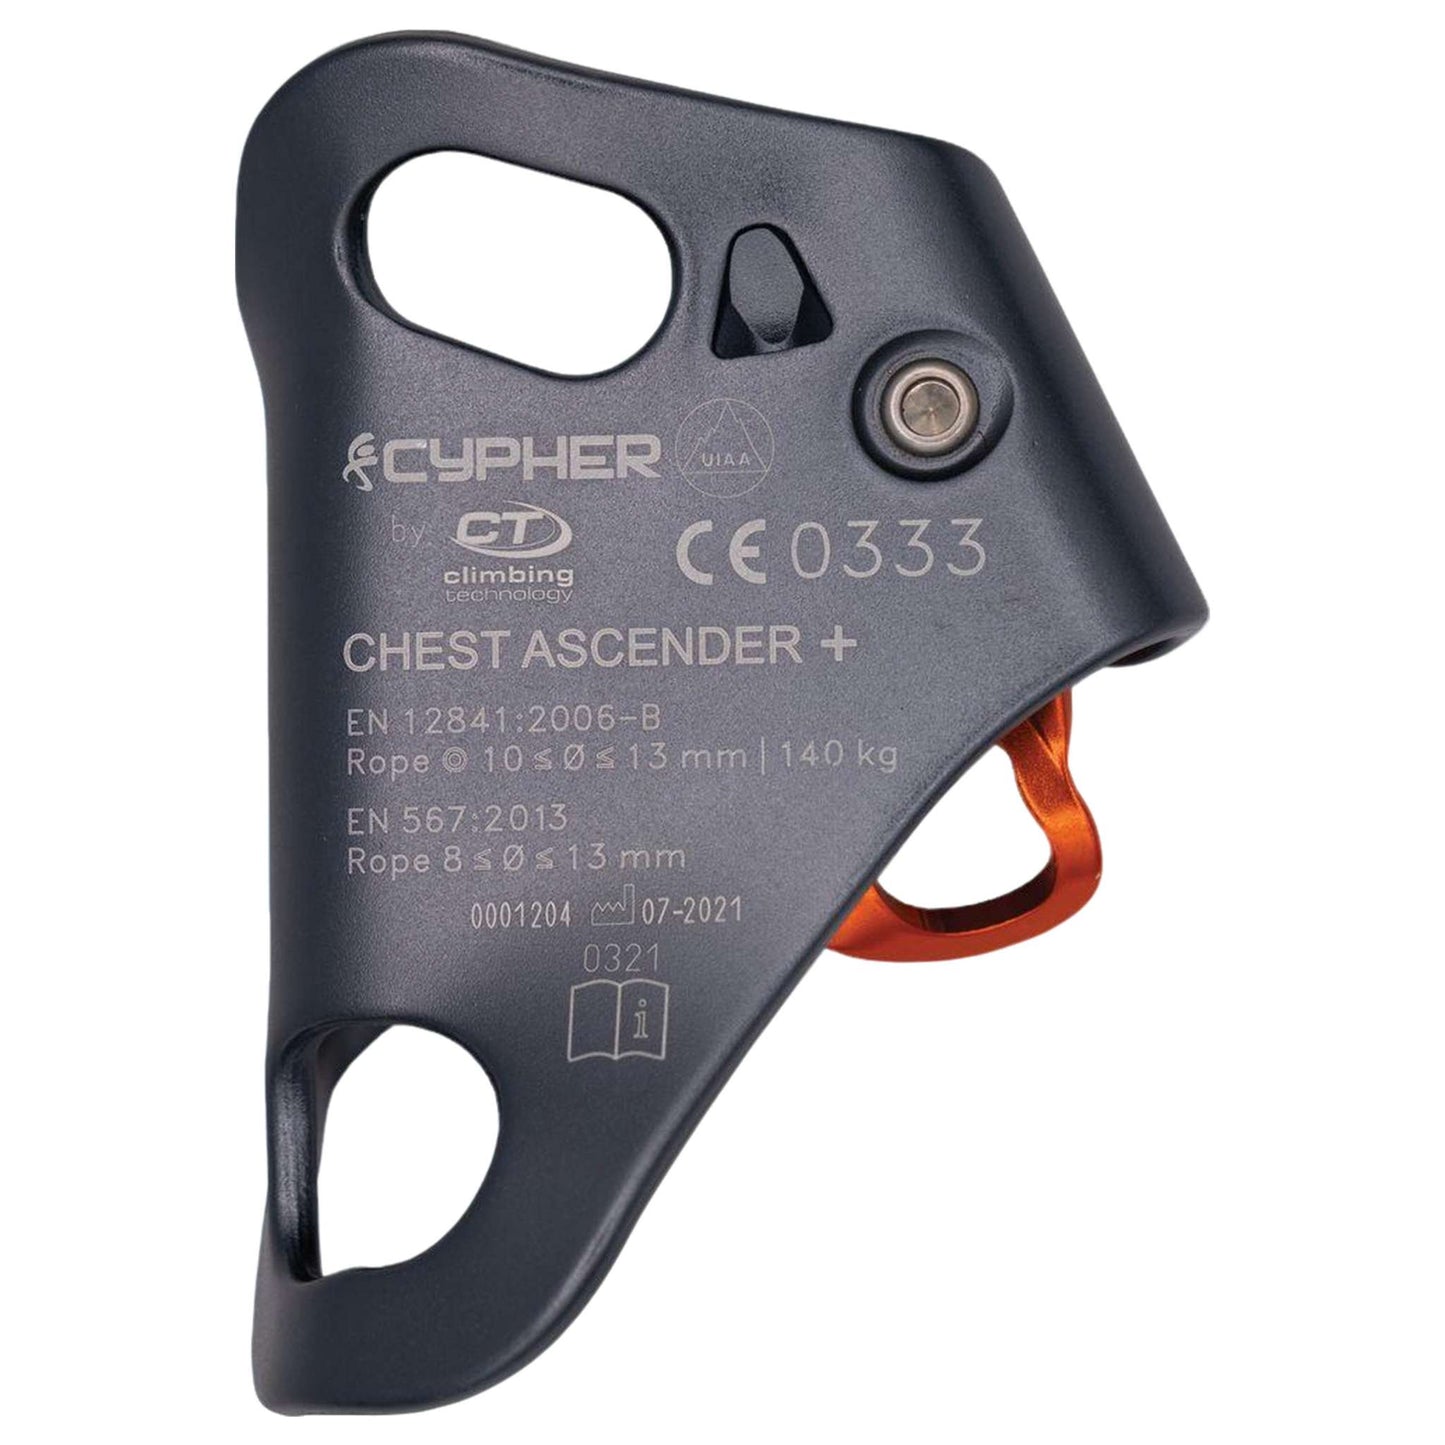 Chest Ascender – Precision Climbing Equipment for Enhanced Vertical Journeys